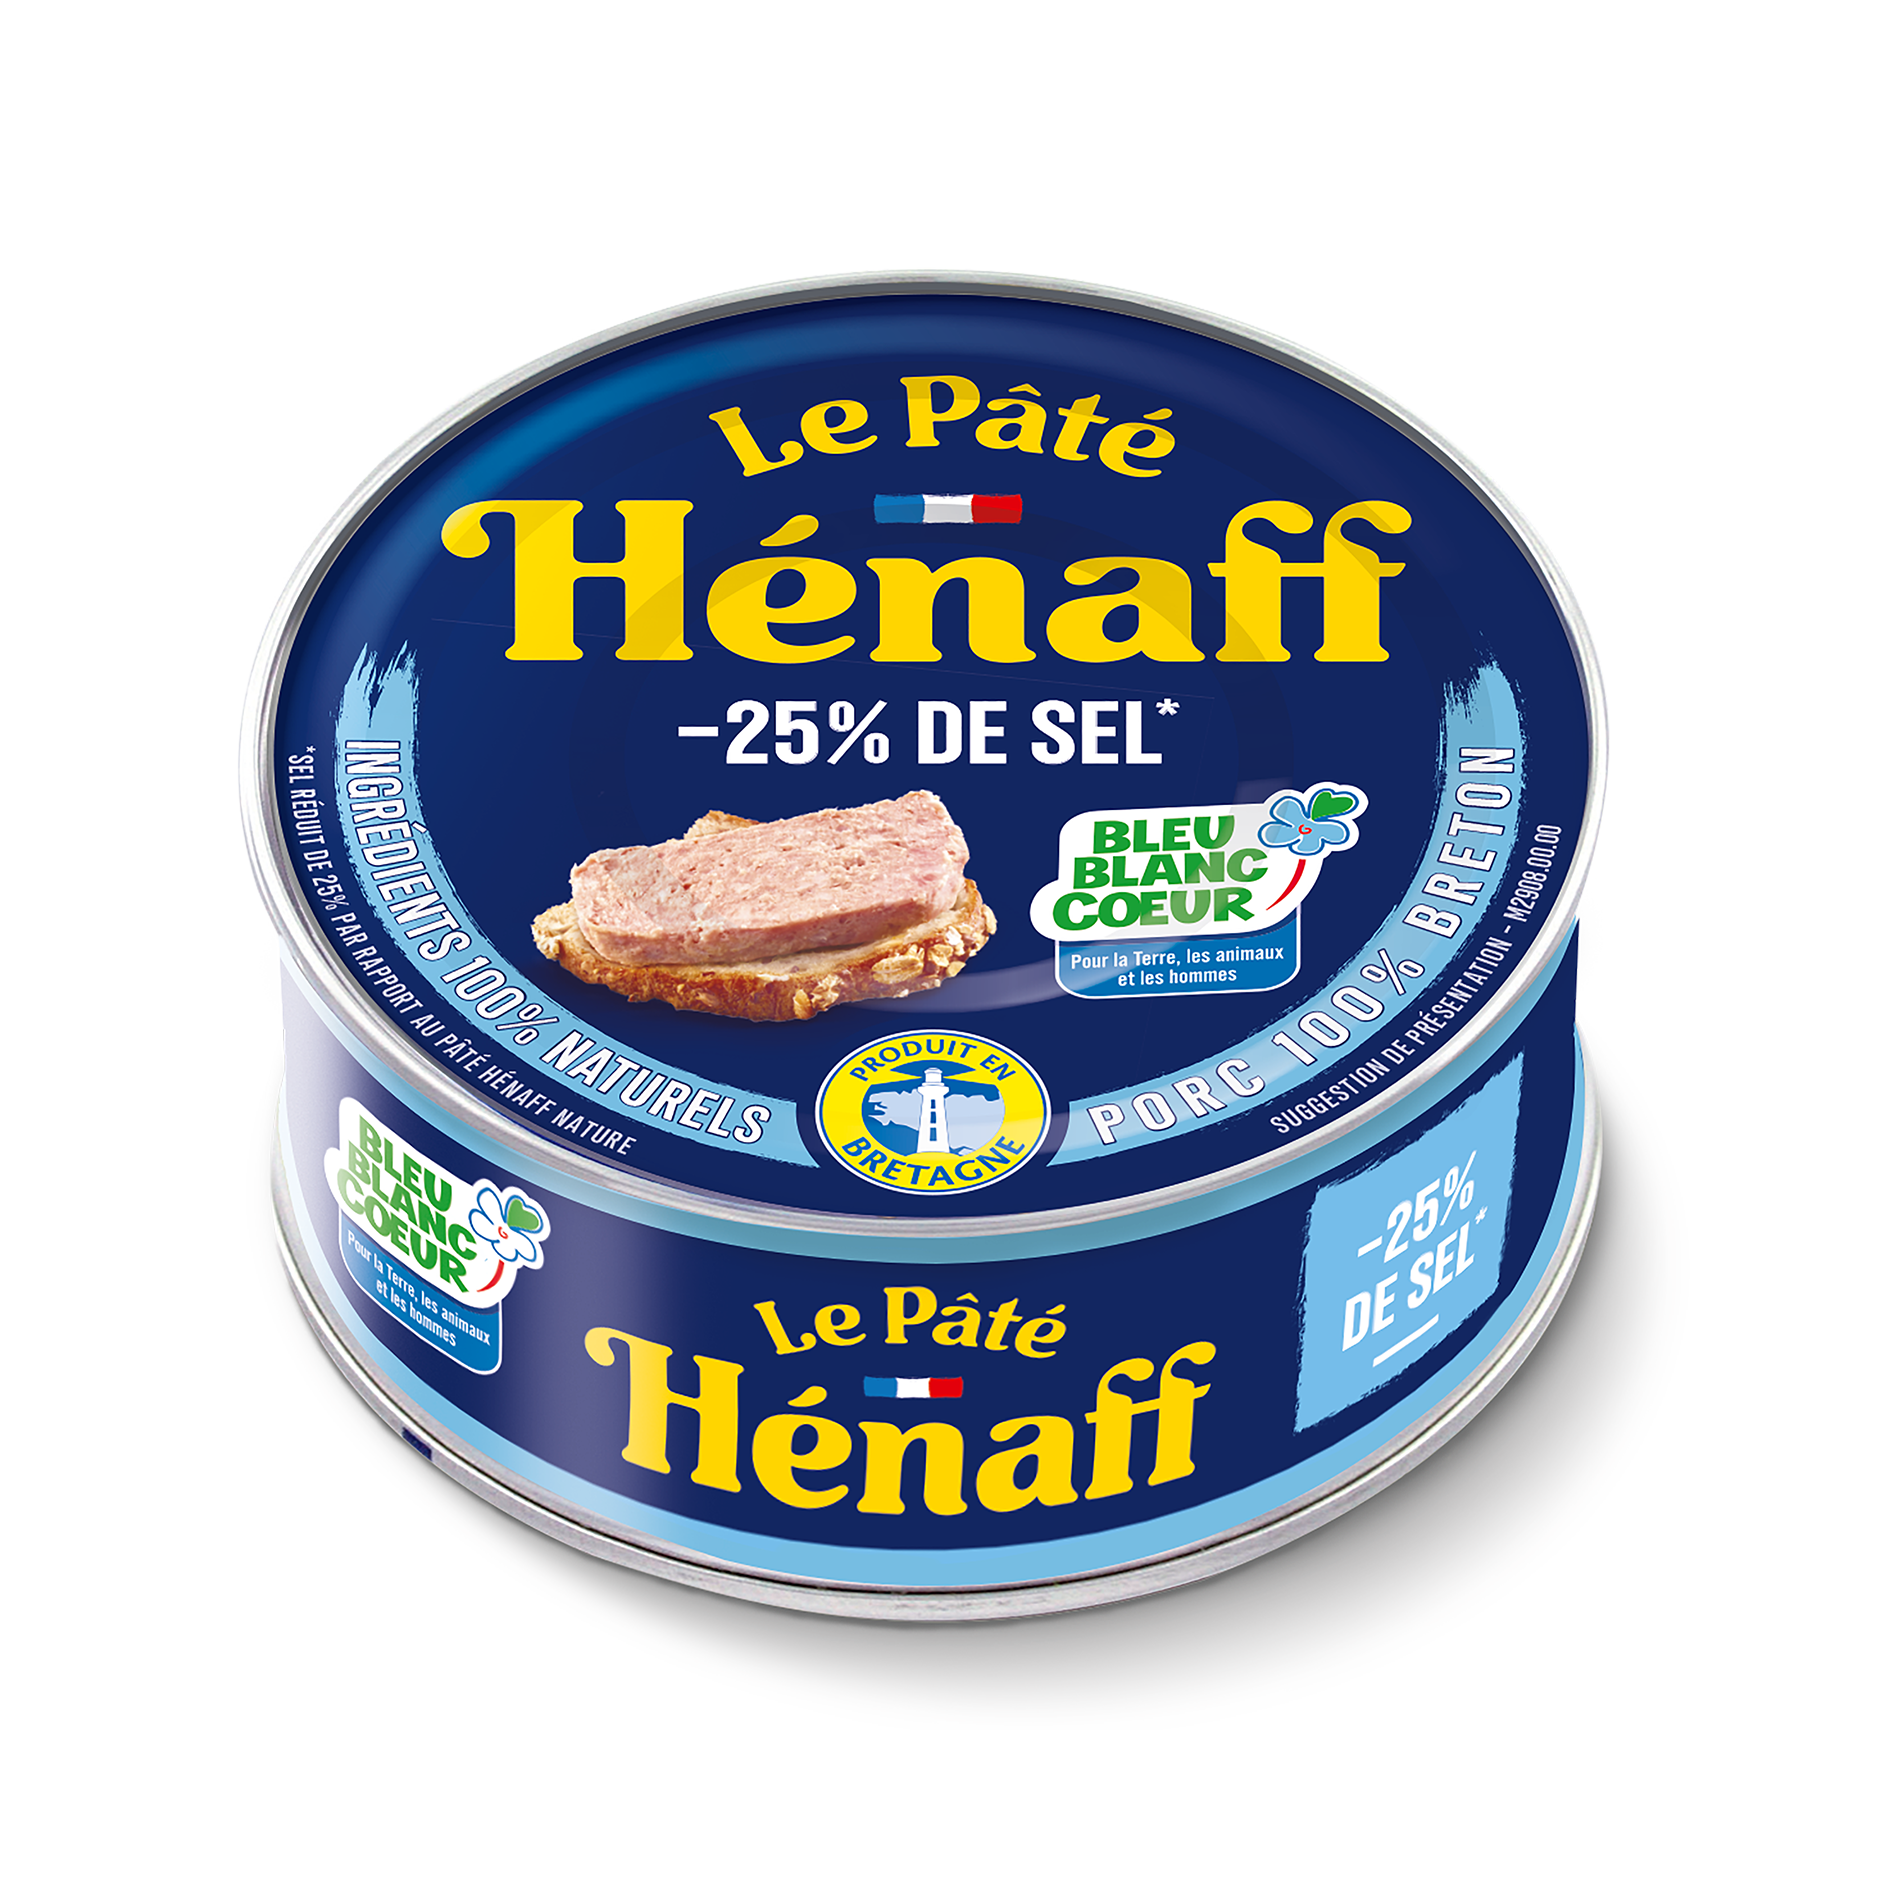 Pâté Hénaff -25% de sel